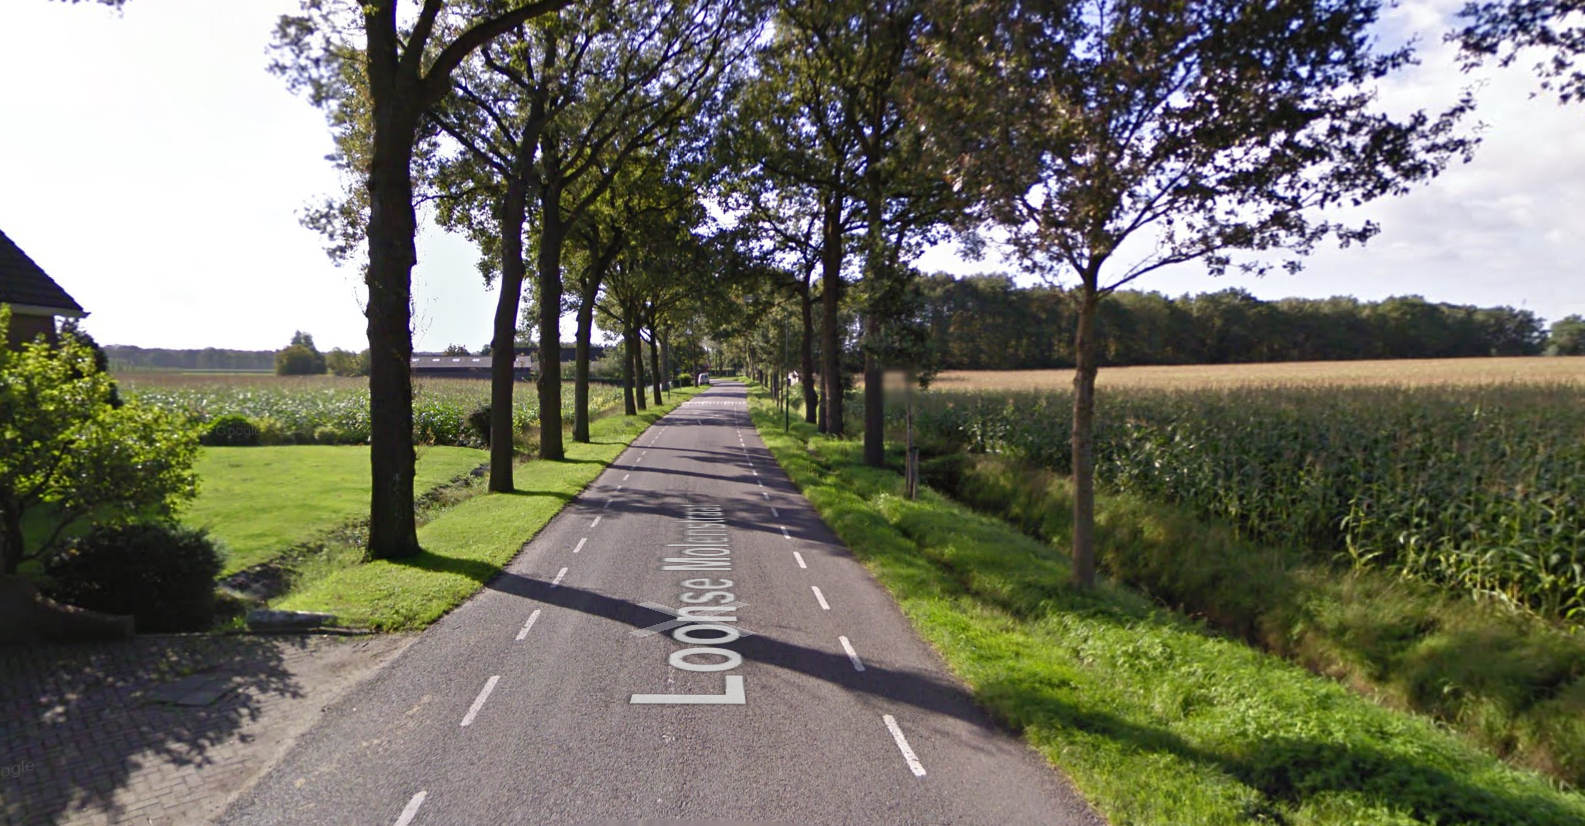 Molenstraat, Loon op Zand. Google Streetview, september 2010.